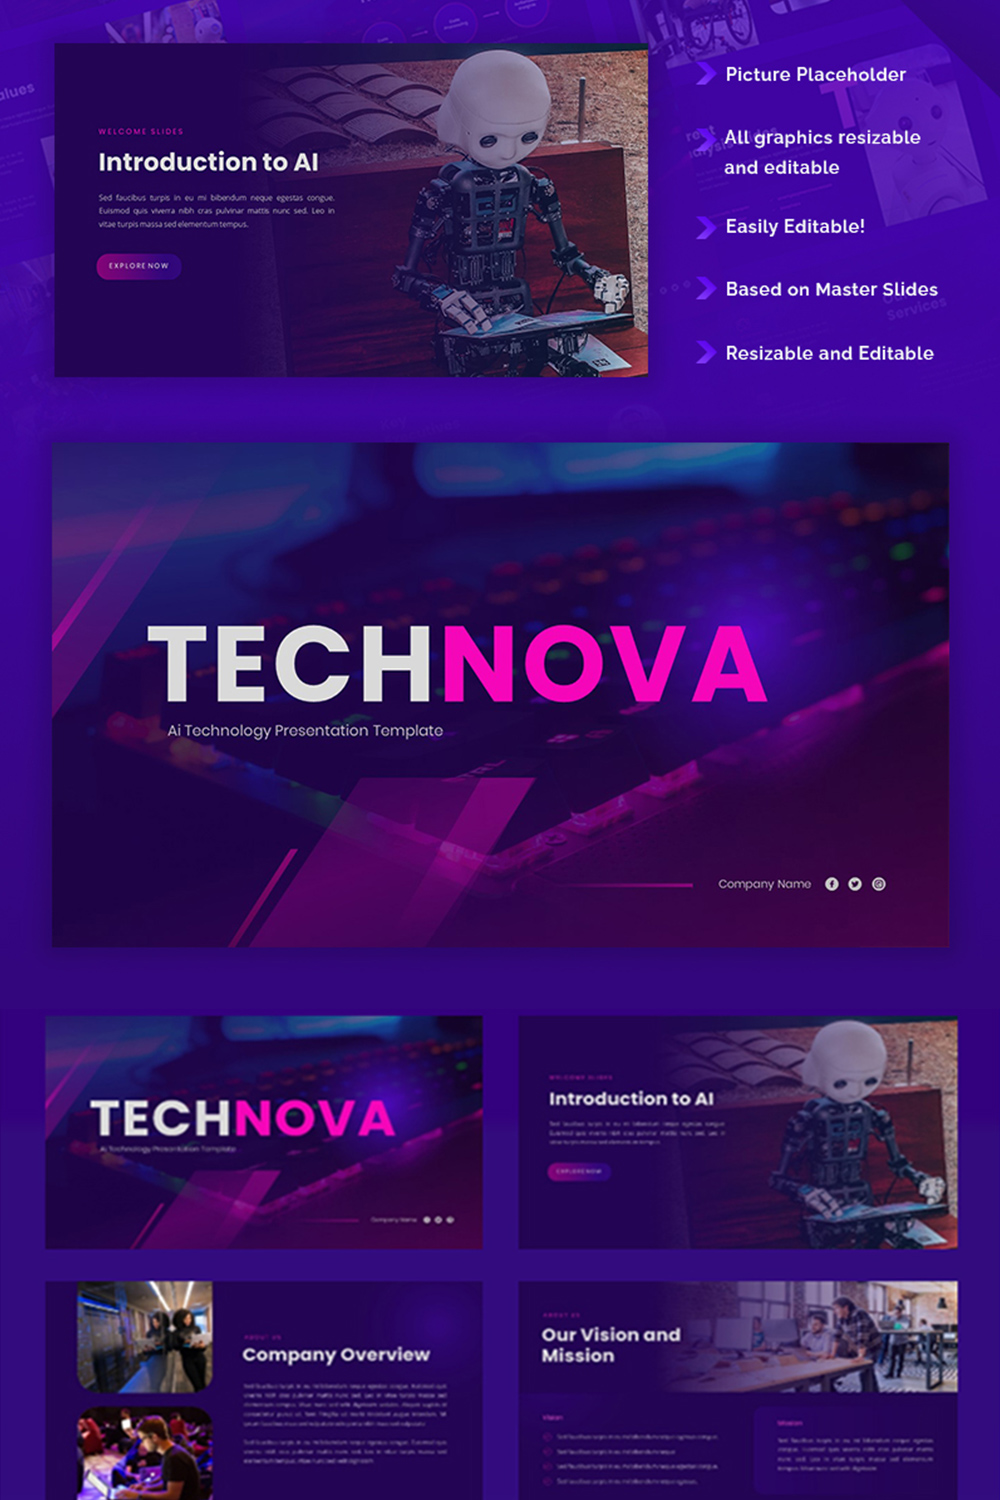 Technova - AI Technology PowerPoint Template pinterest preview image.